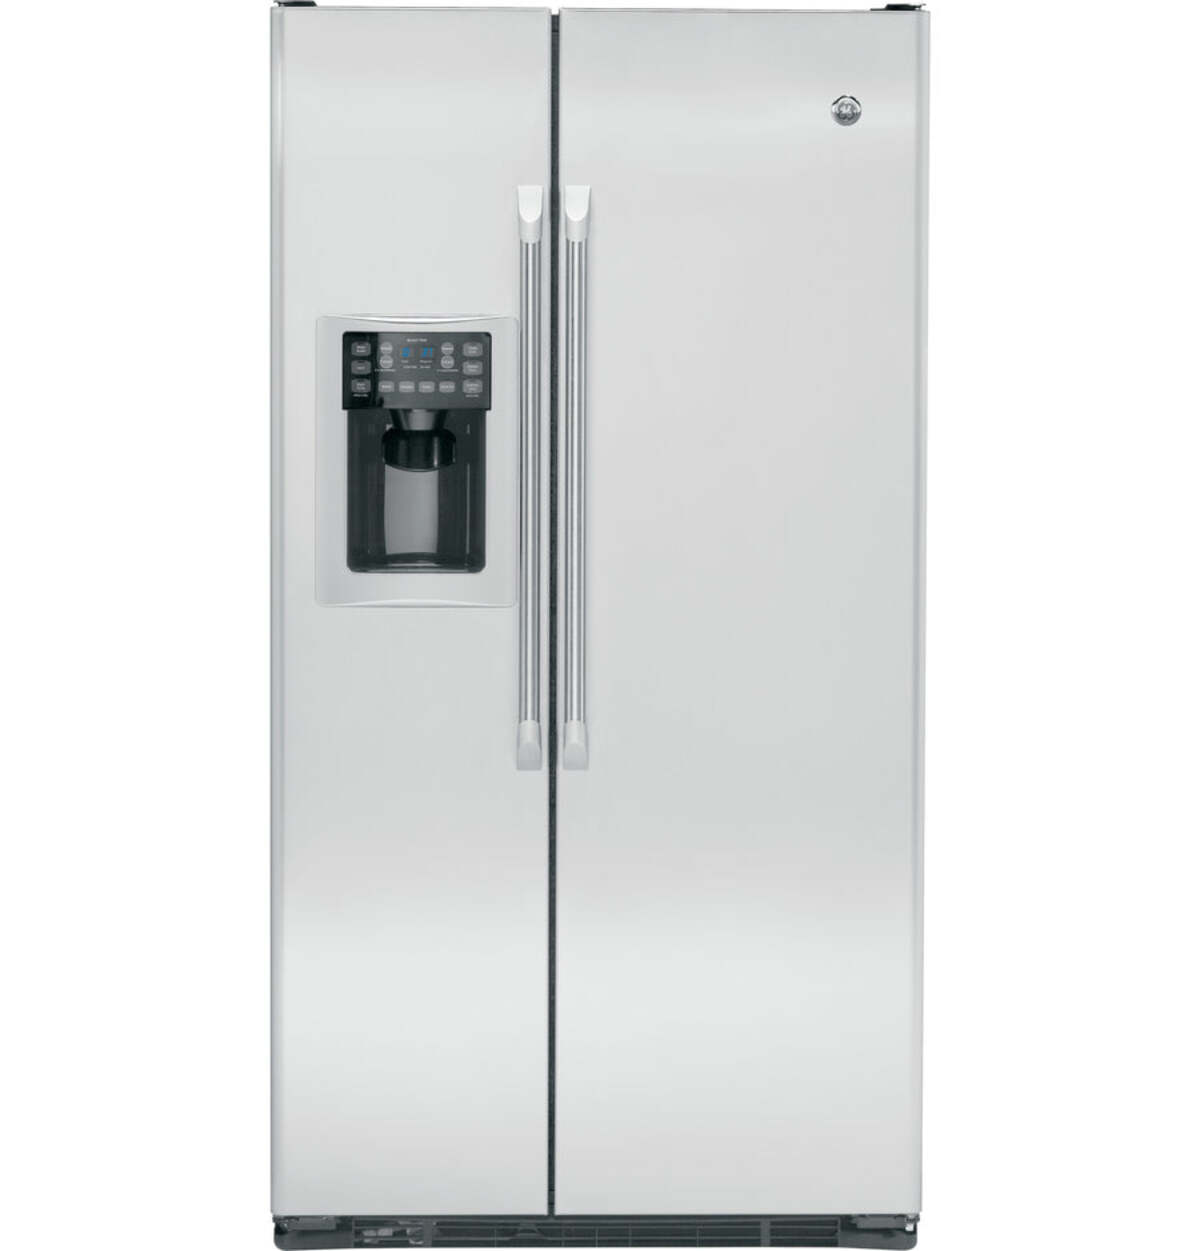 How To Fix The Error Code EF For GE Refrigerator & Freezer